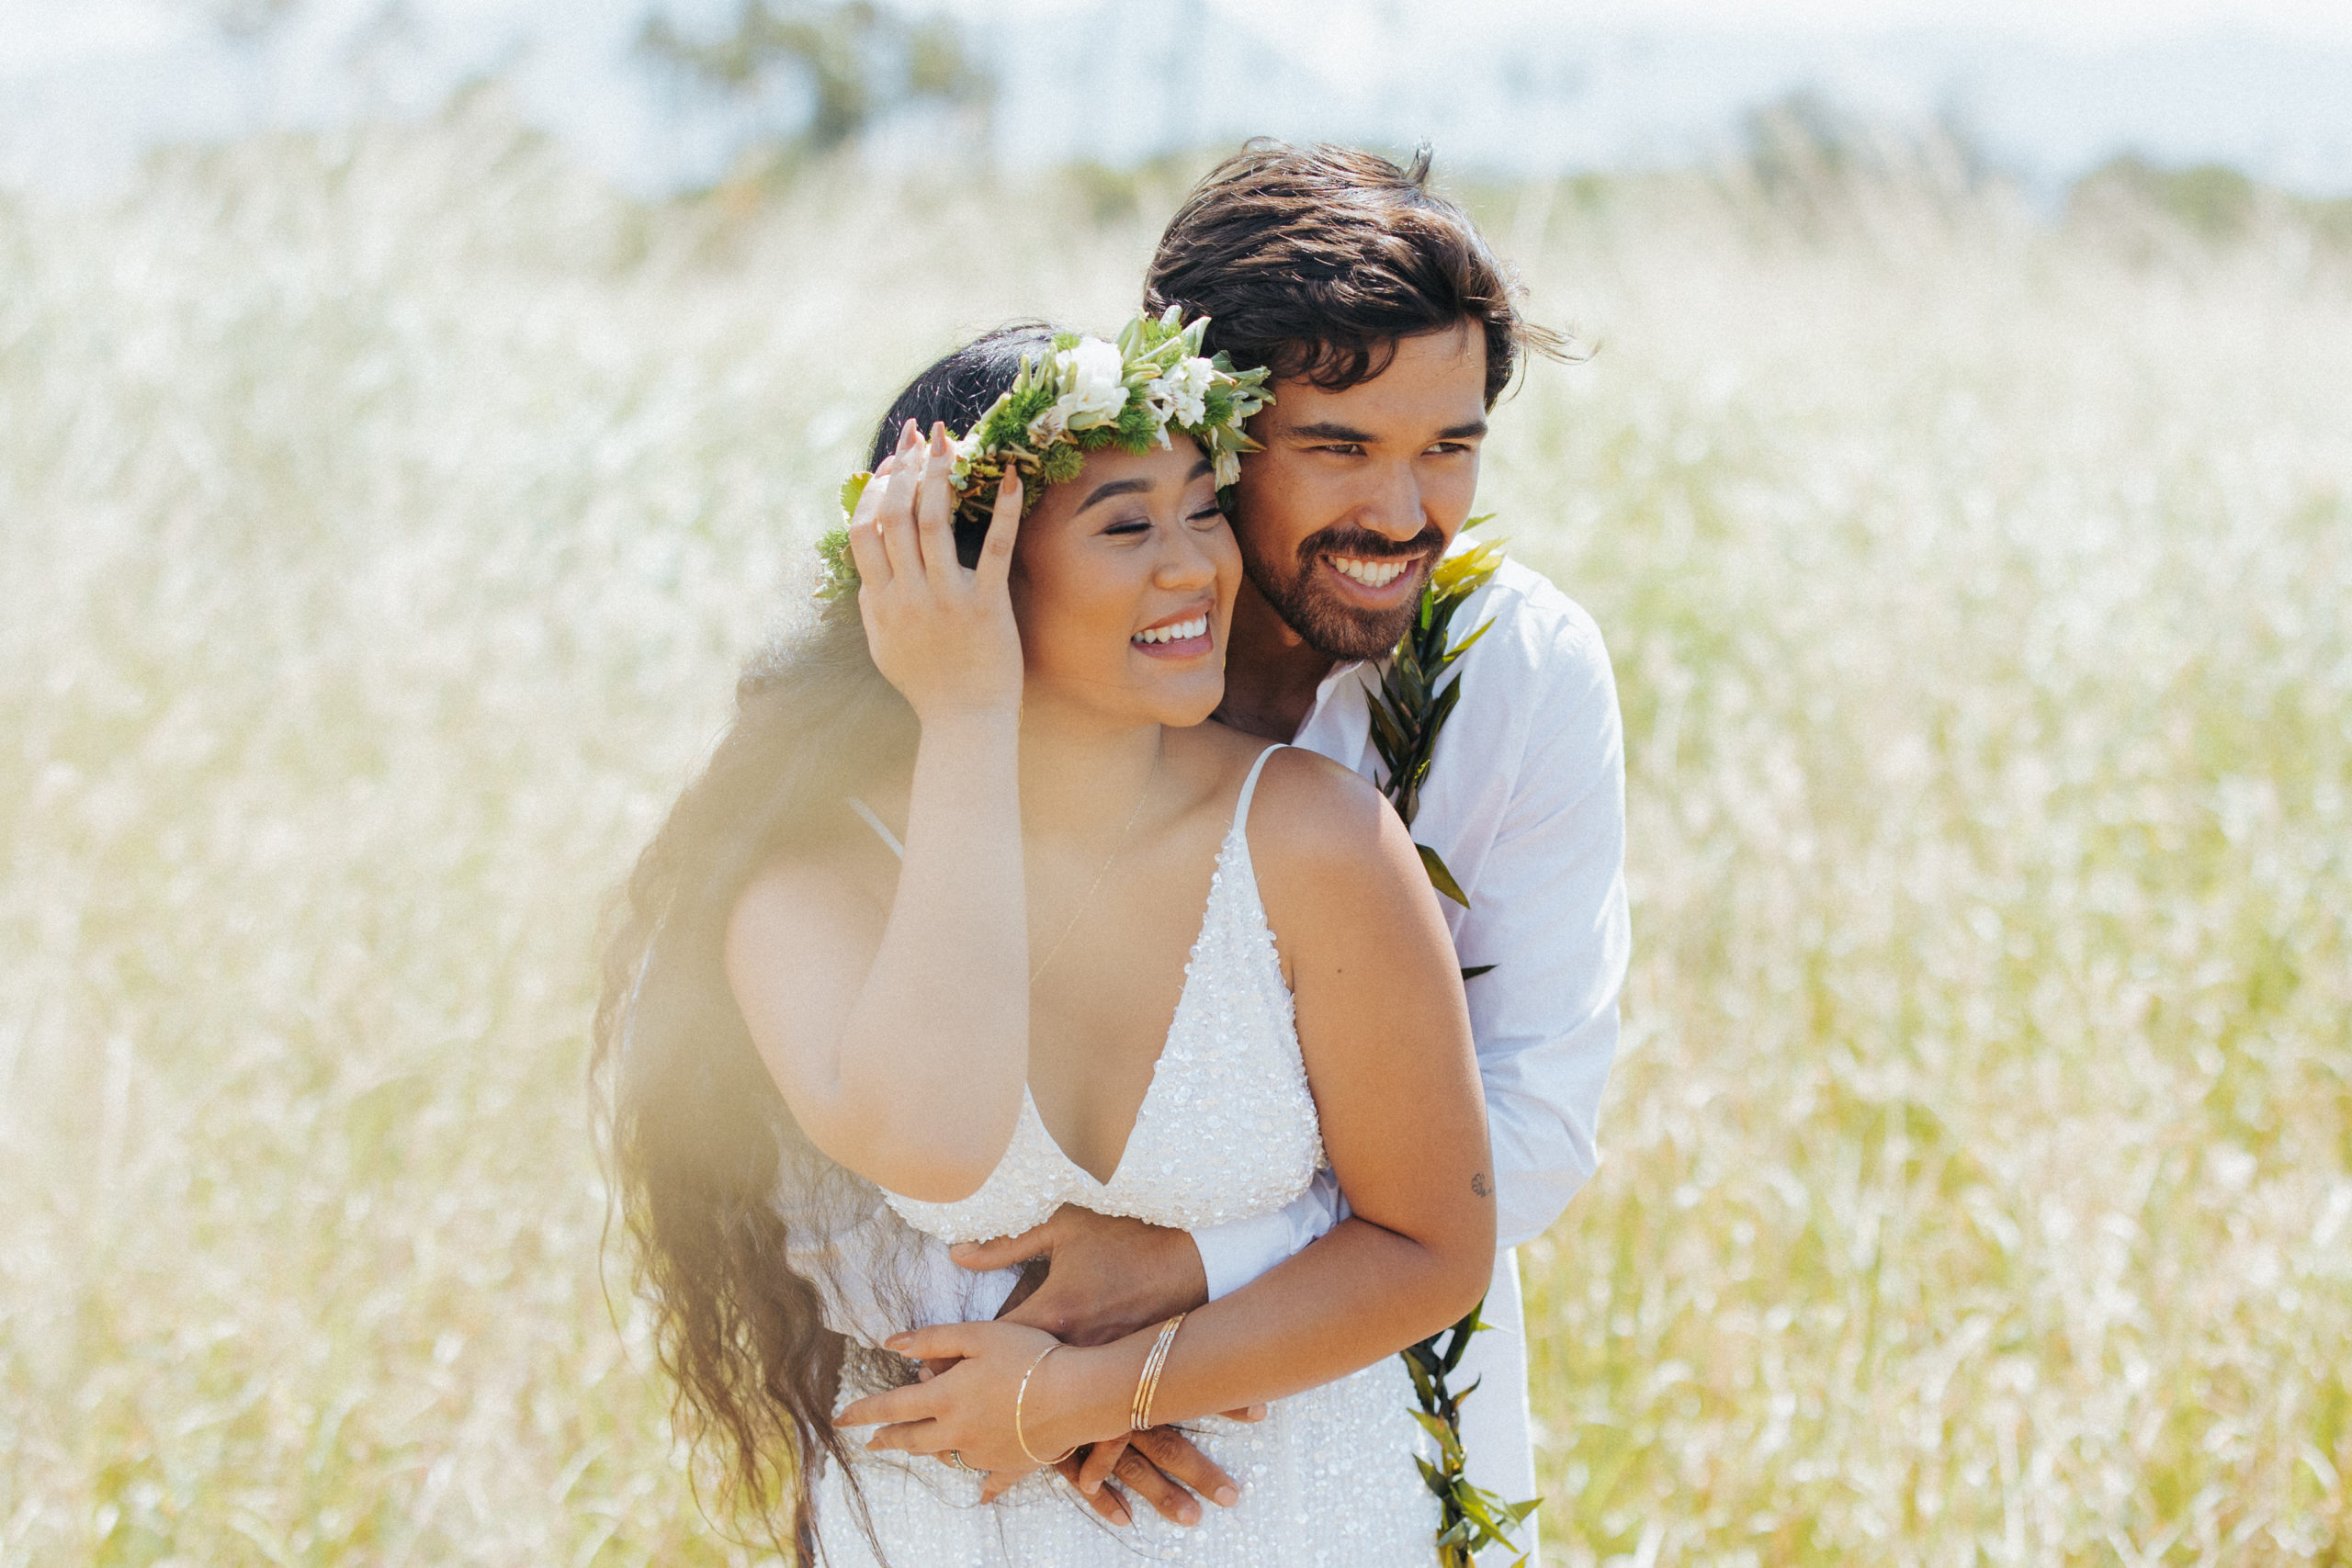 bride and groom elopement portrait in maui hawaii